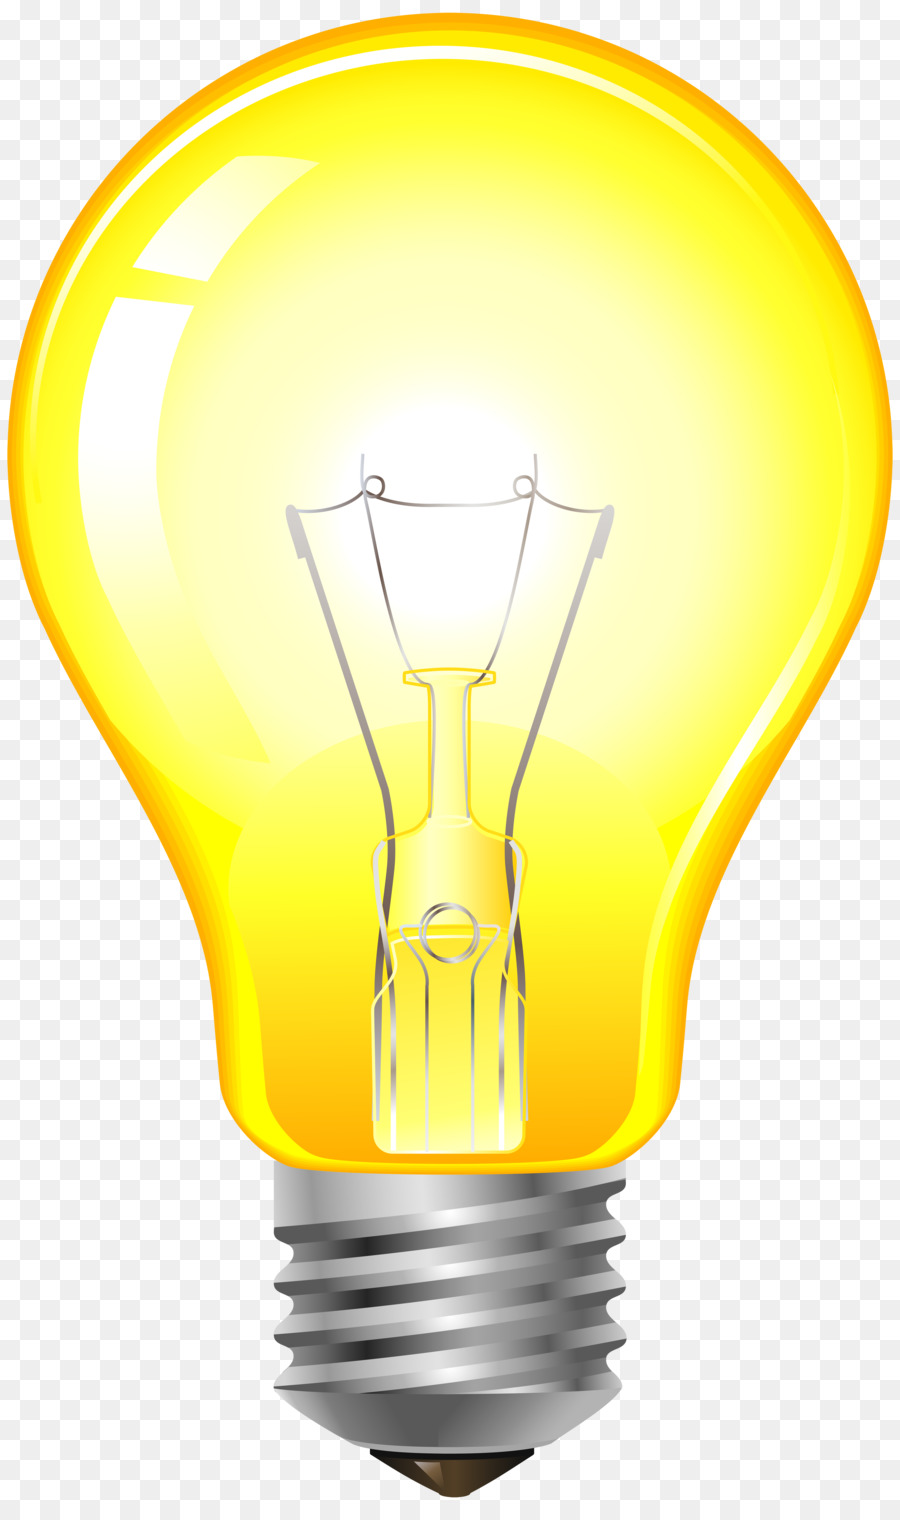 Incandescent light bulb Lighting Transparency and translucency - bulb png download - 4768*8000 - Free Transparent  Light png Download.